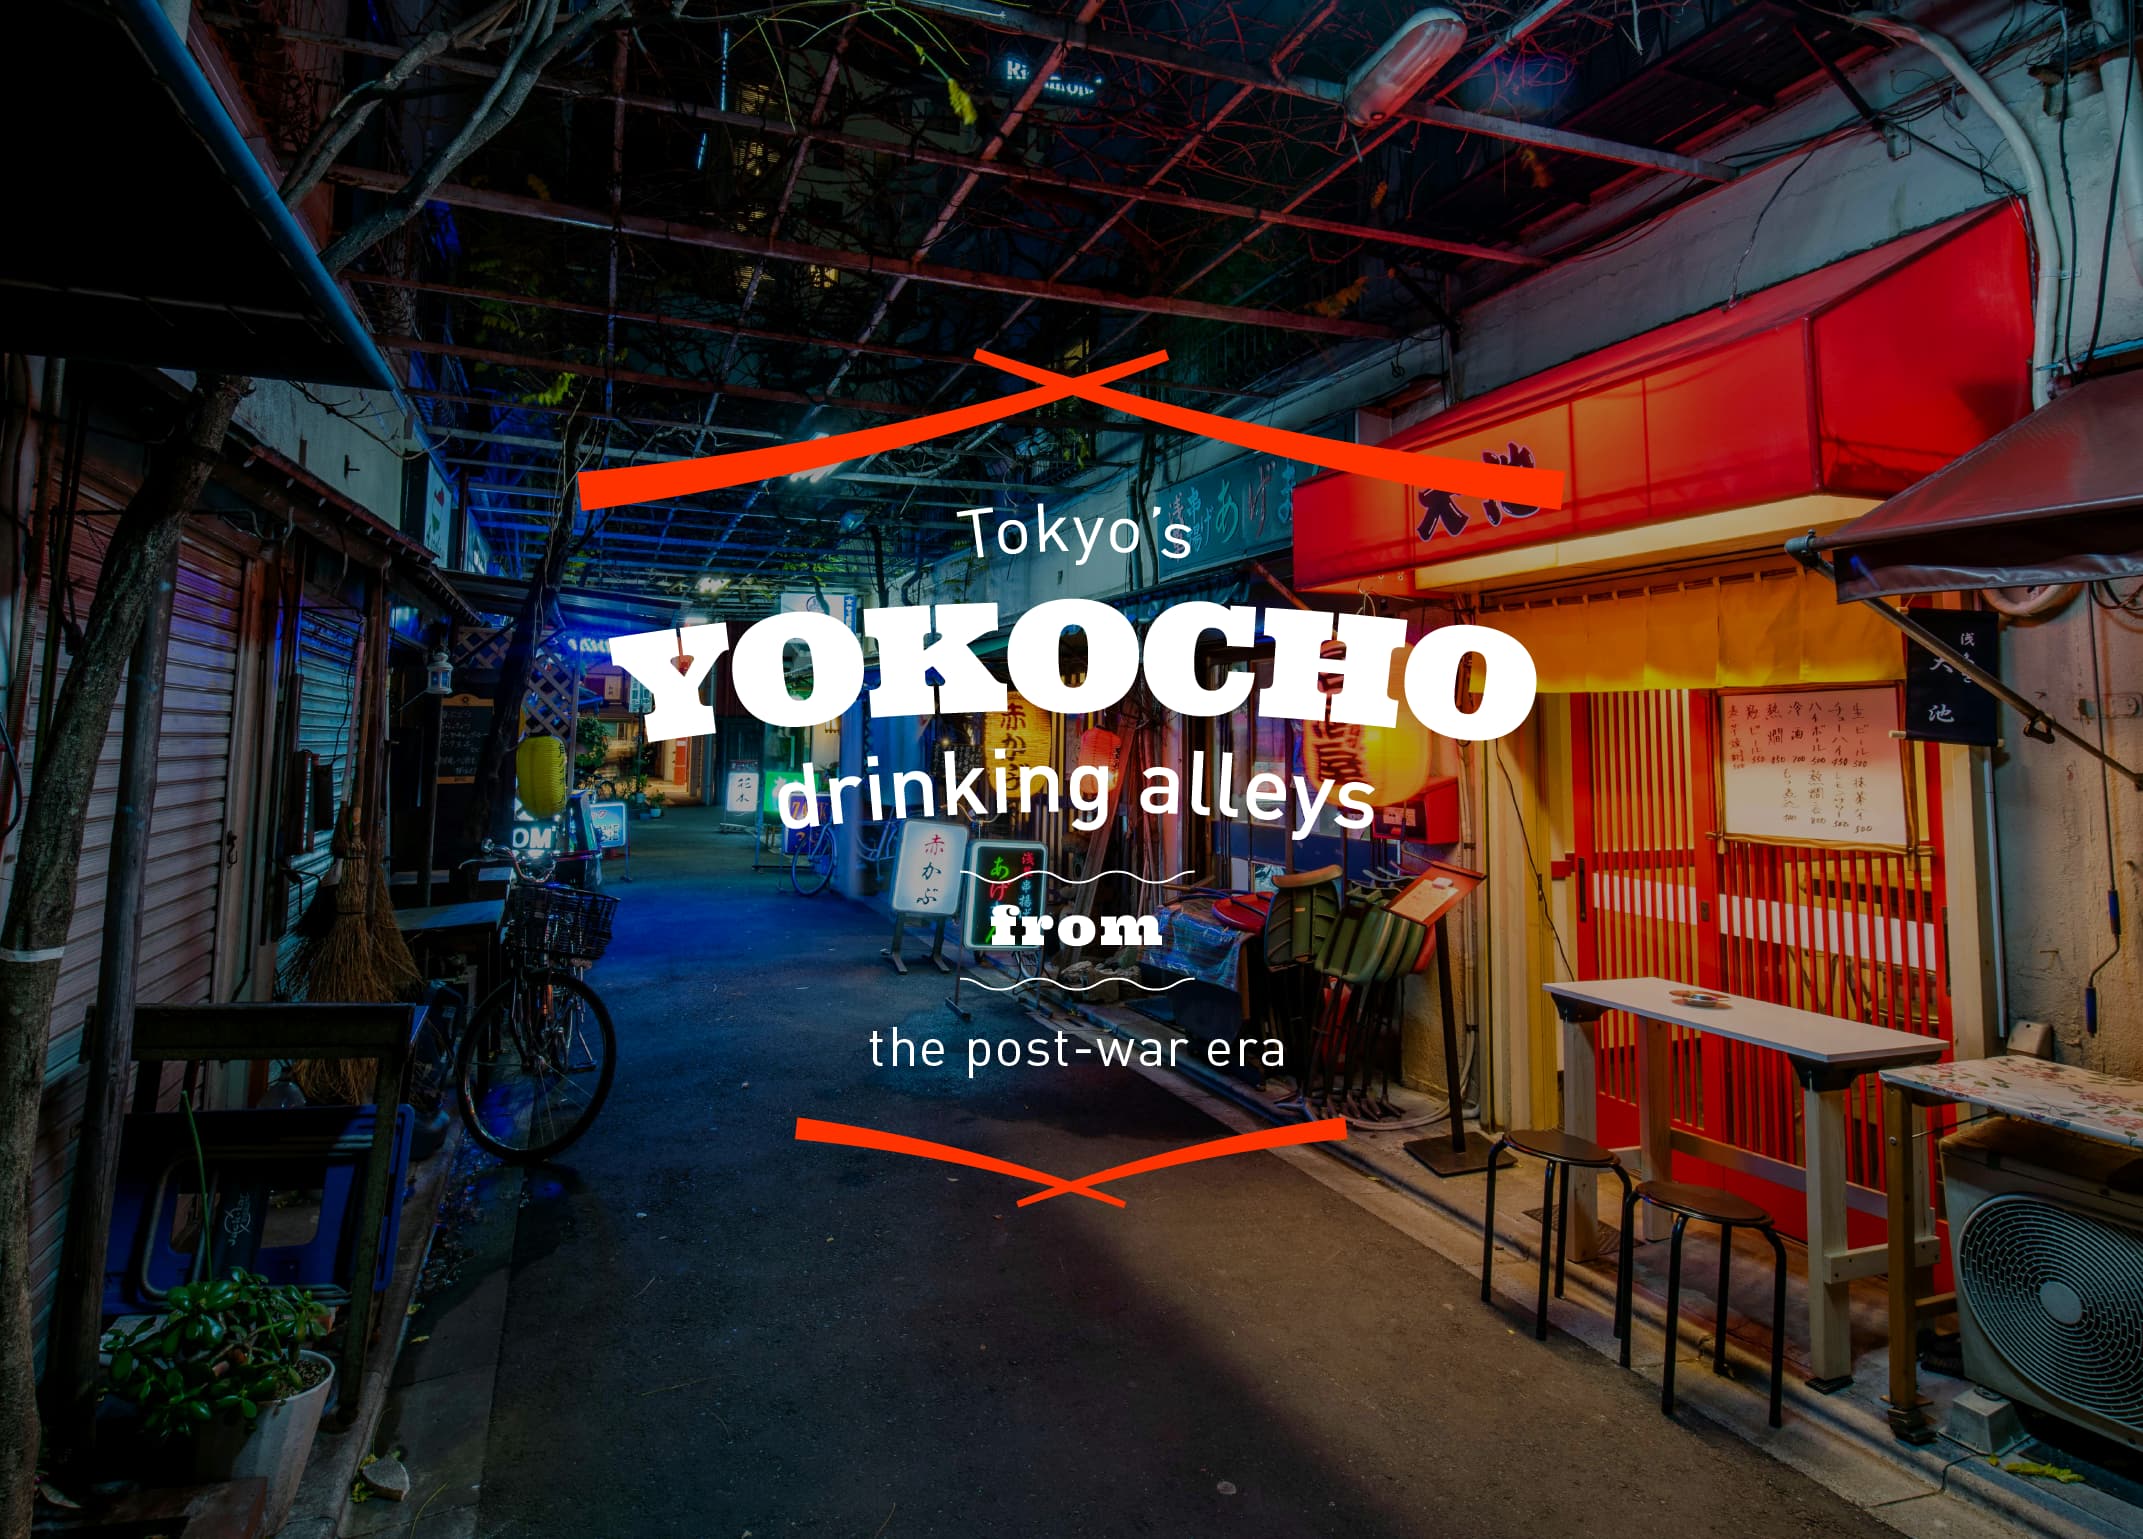 Tokyo’s “Yokocho” drinking alleys from the post-war era